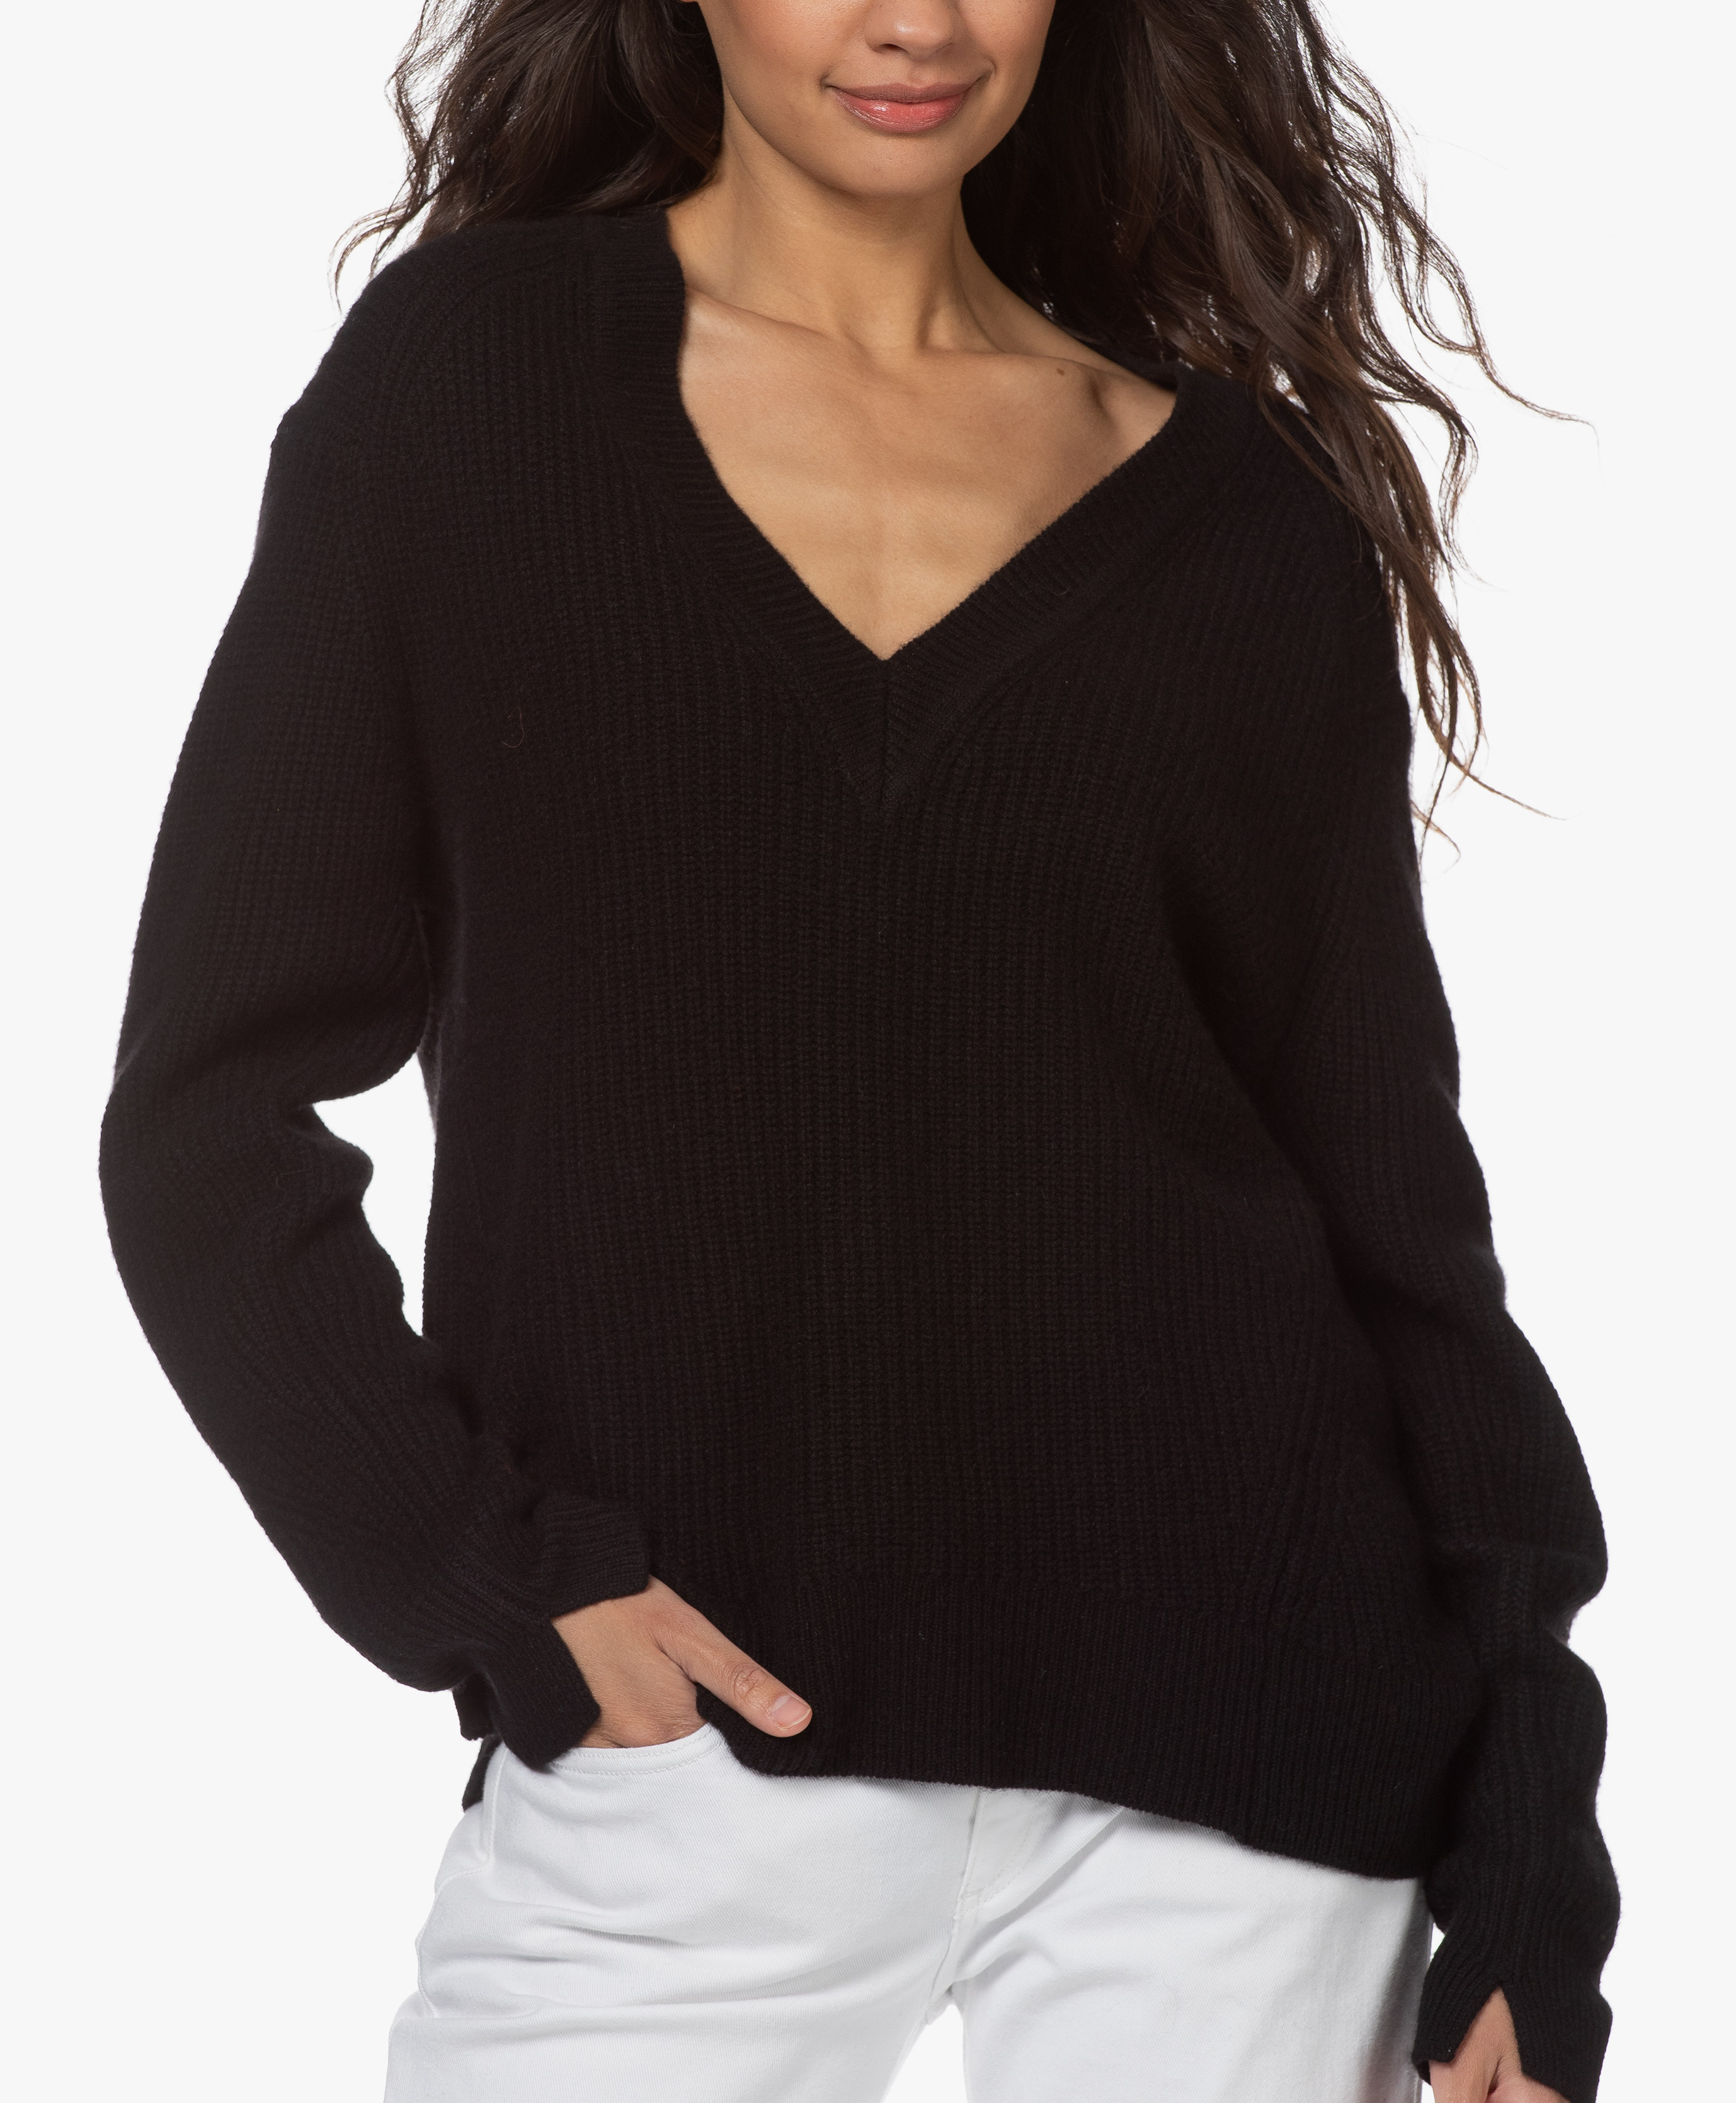 Rag & Bone Pierce Cashmere V-neck Sweater - Black - was20fs0538l53 1 - blk